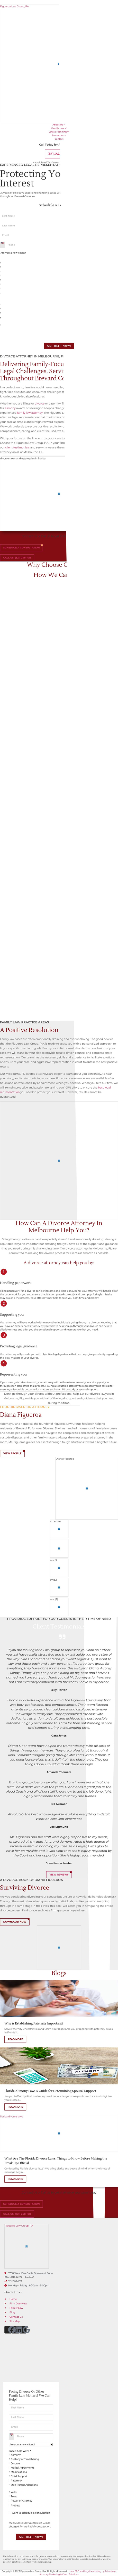 The Figueroa Law Group - Melbourne FL Lawyers